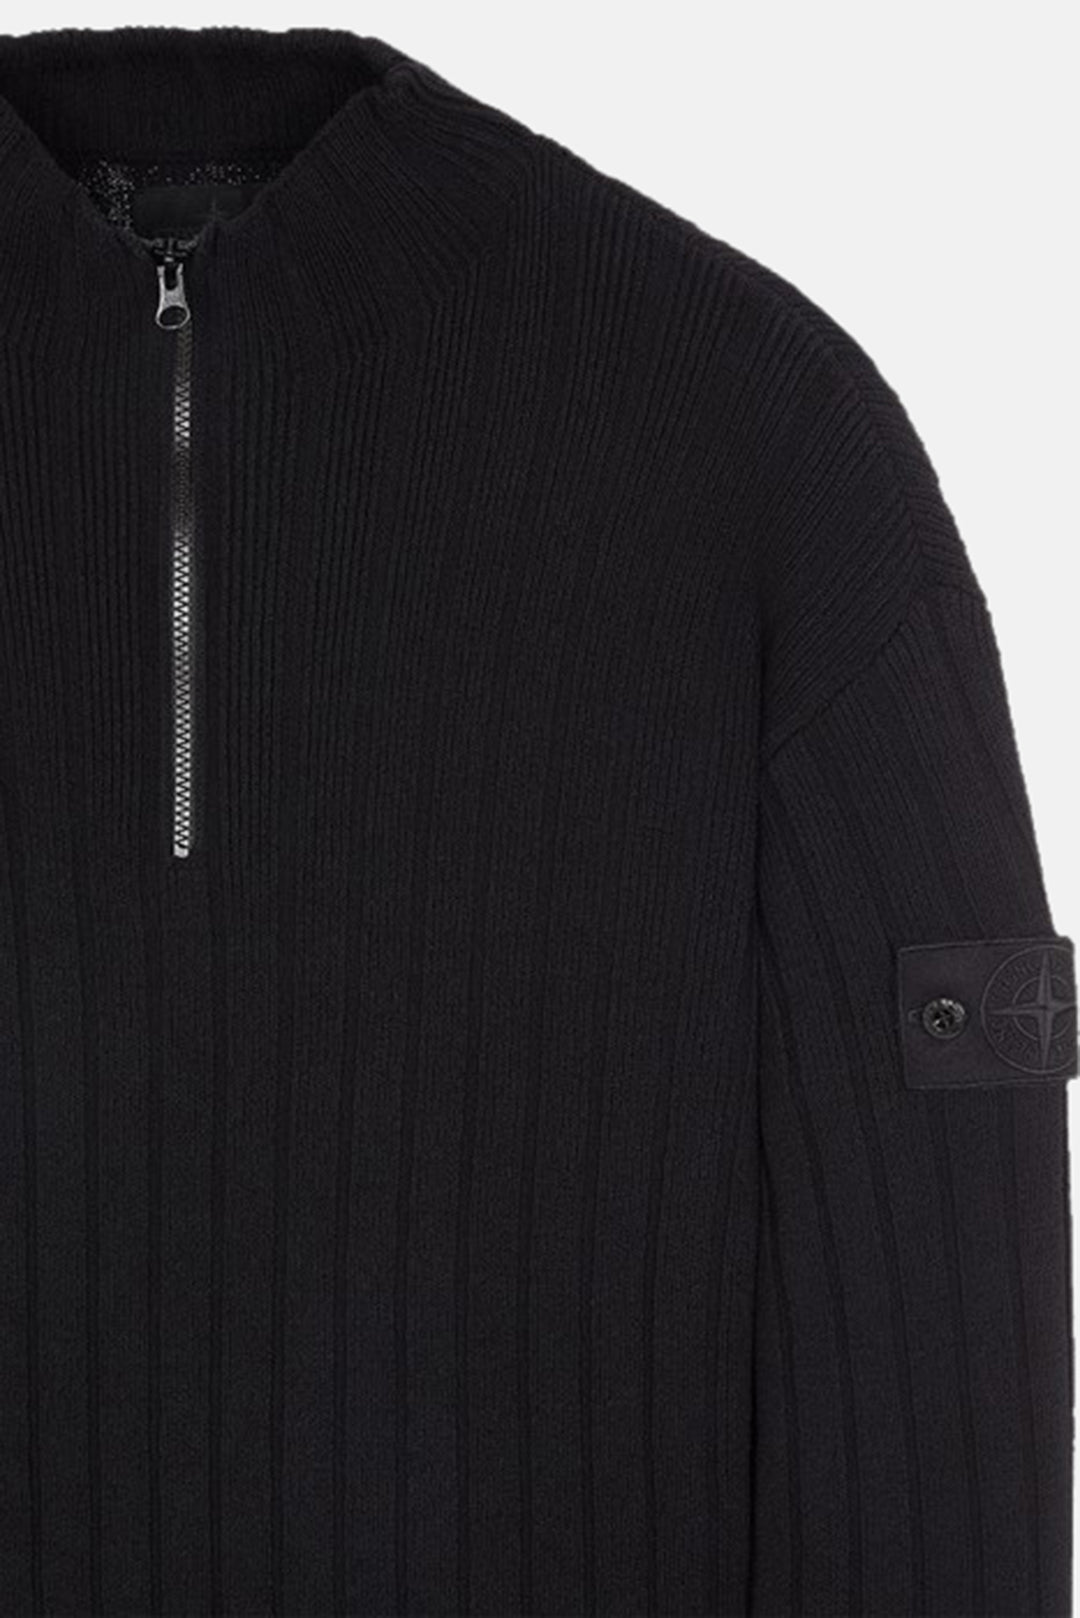 Ghost Piece Quarter Zip Sweater Black